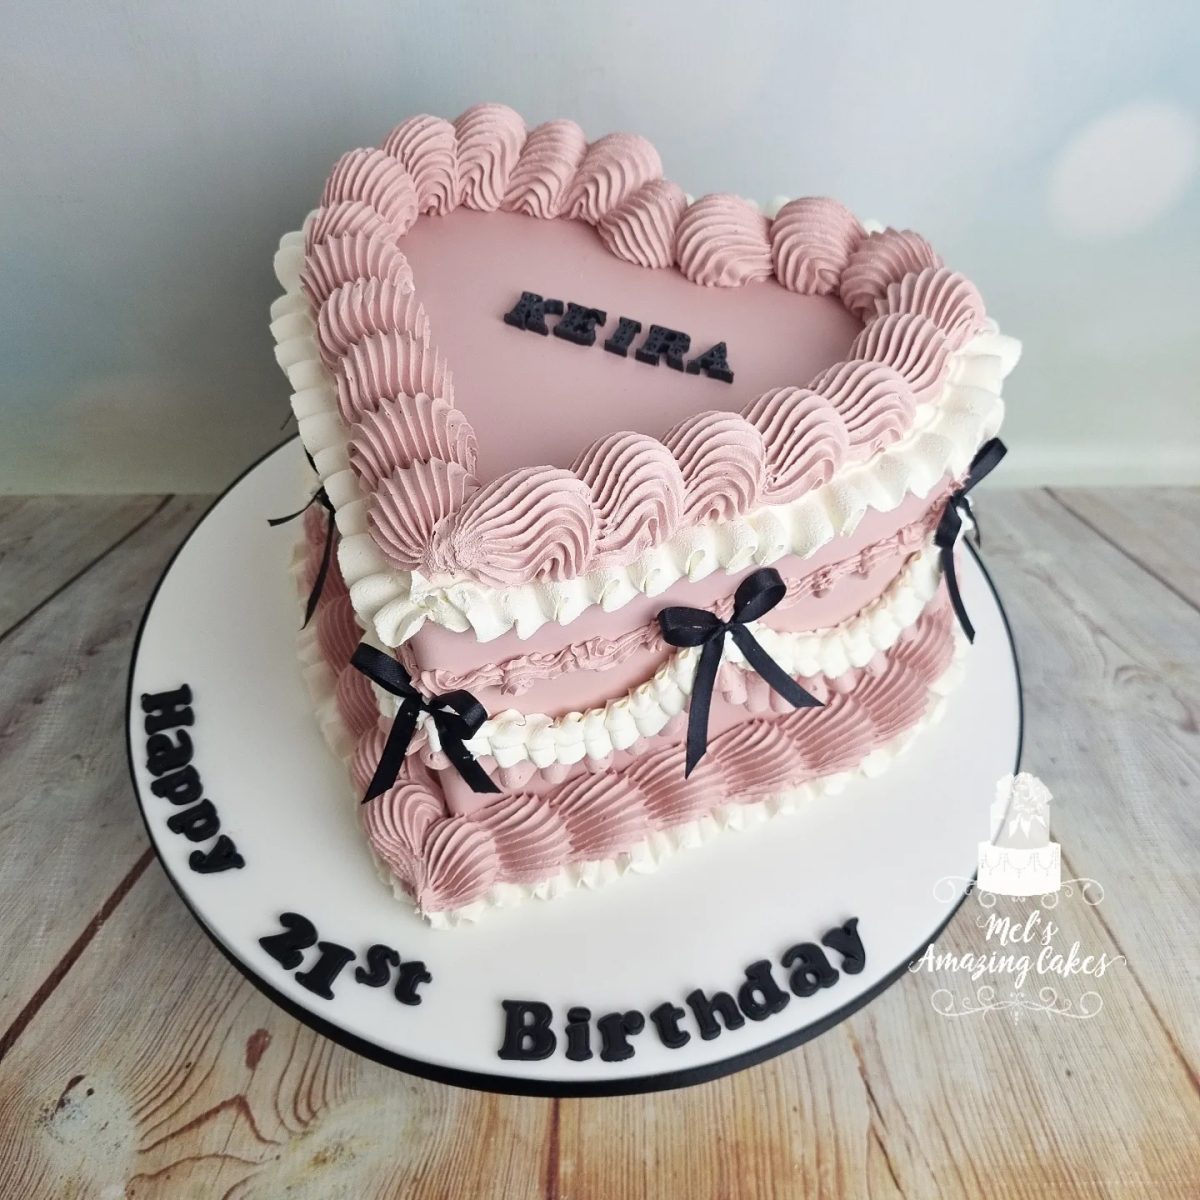 Piped buttercream heart cake